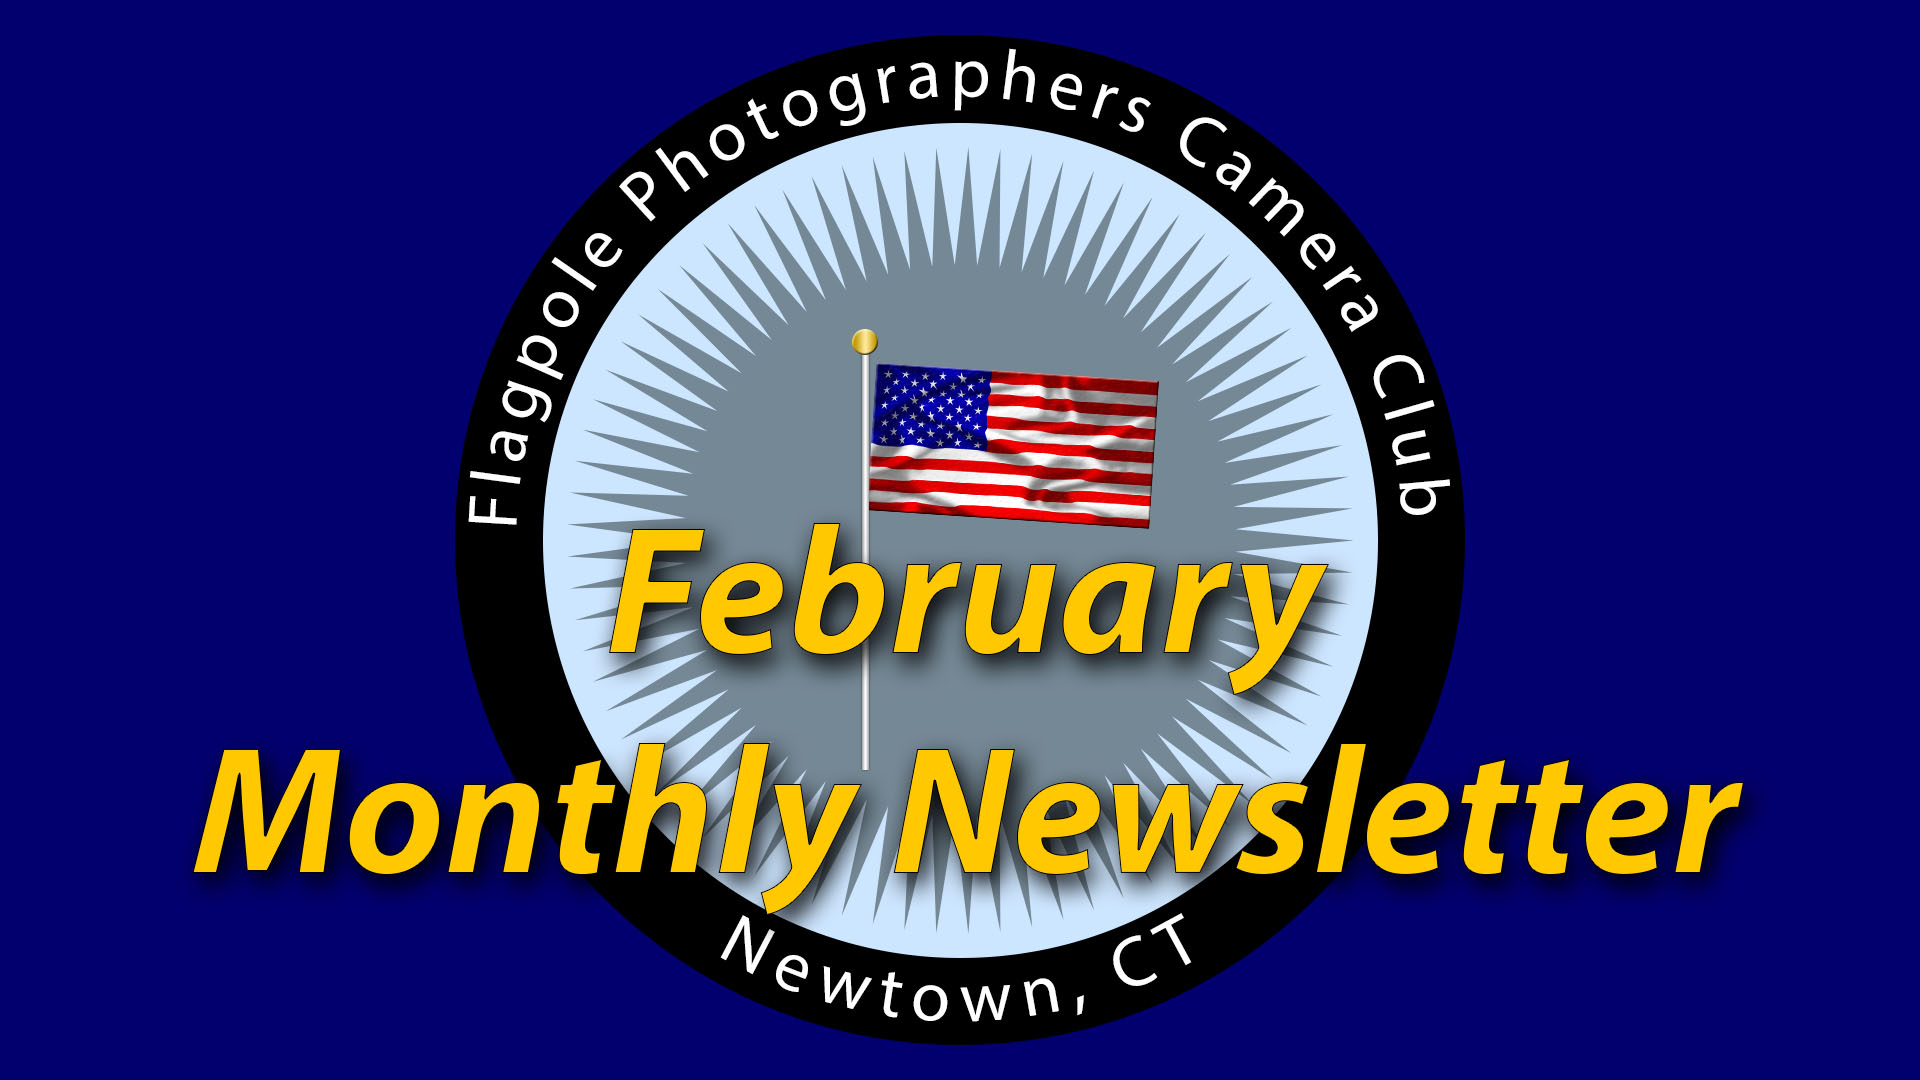 Feb 2018 Monthly Newsletter